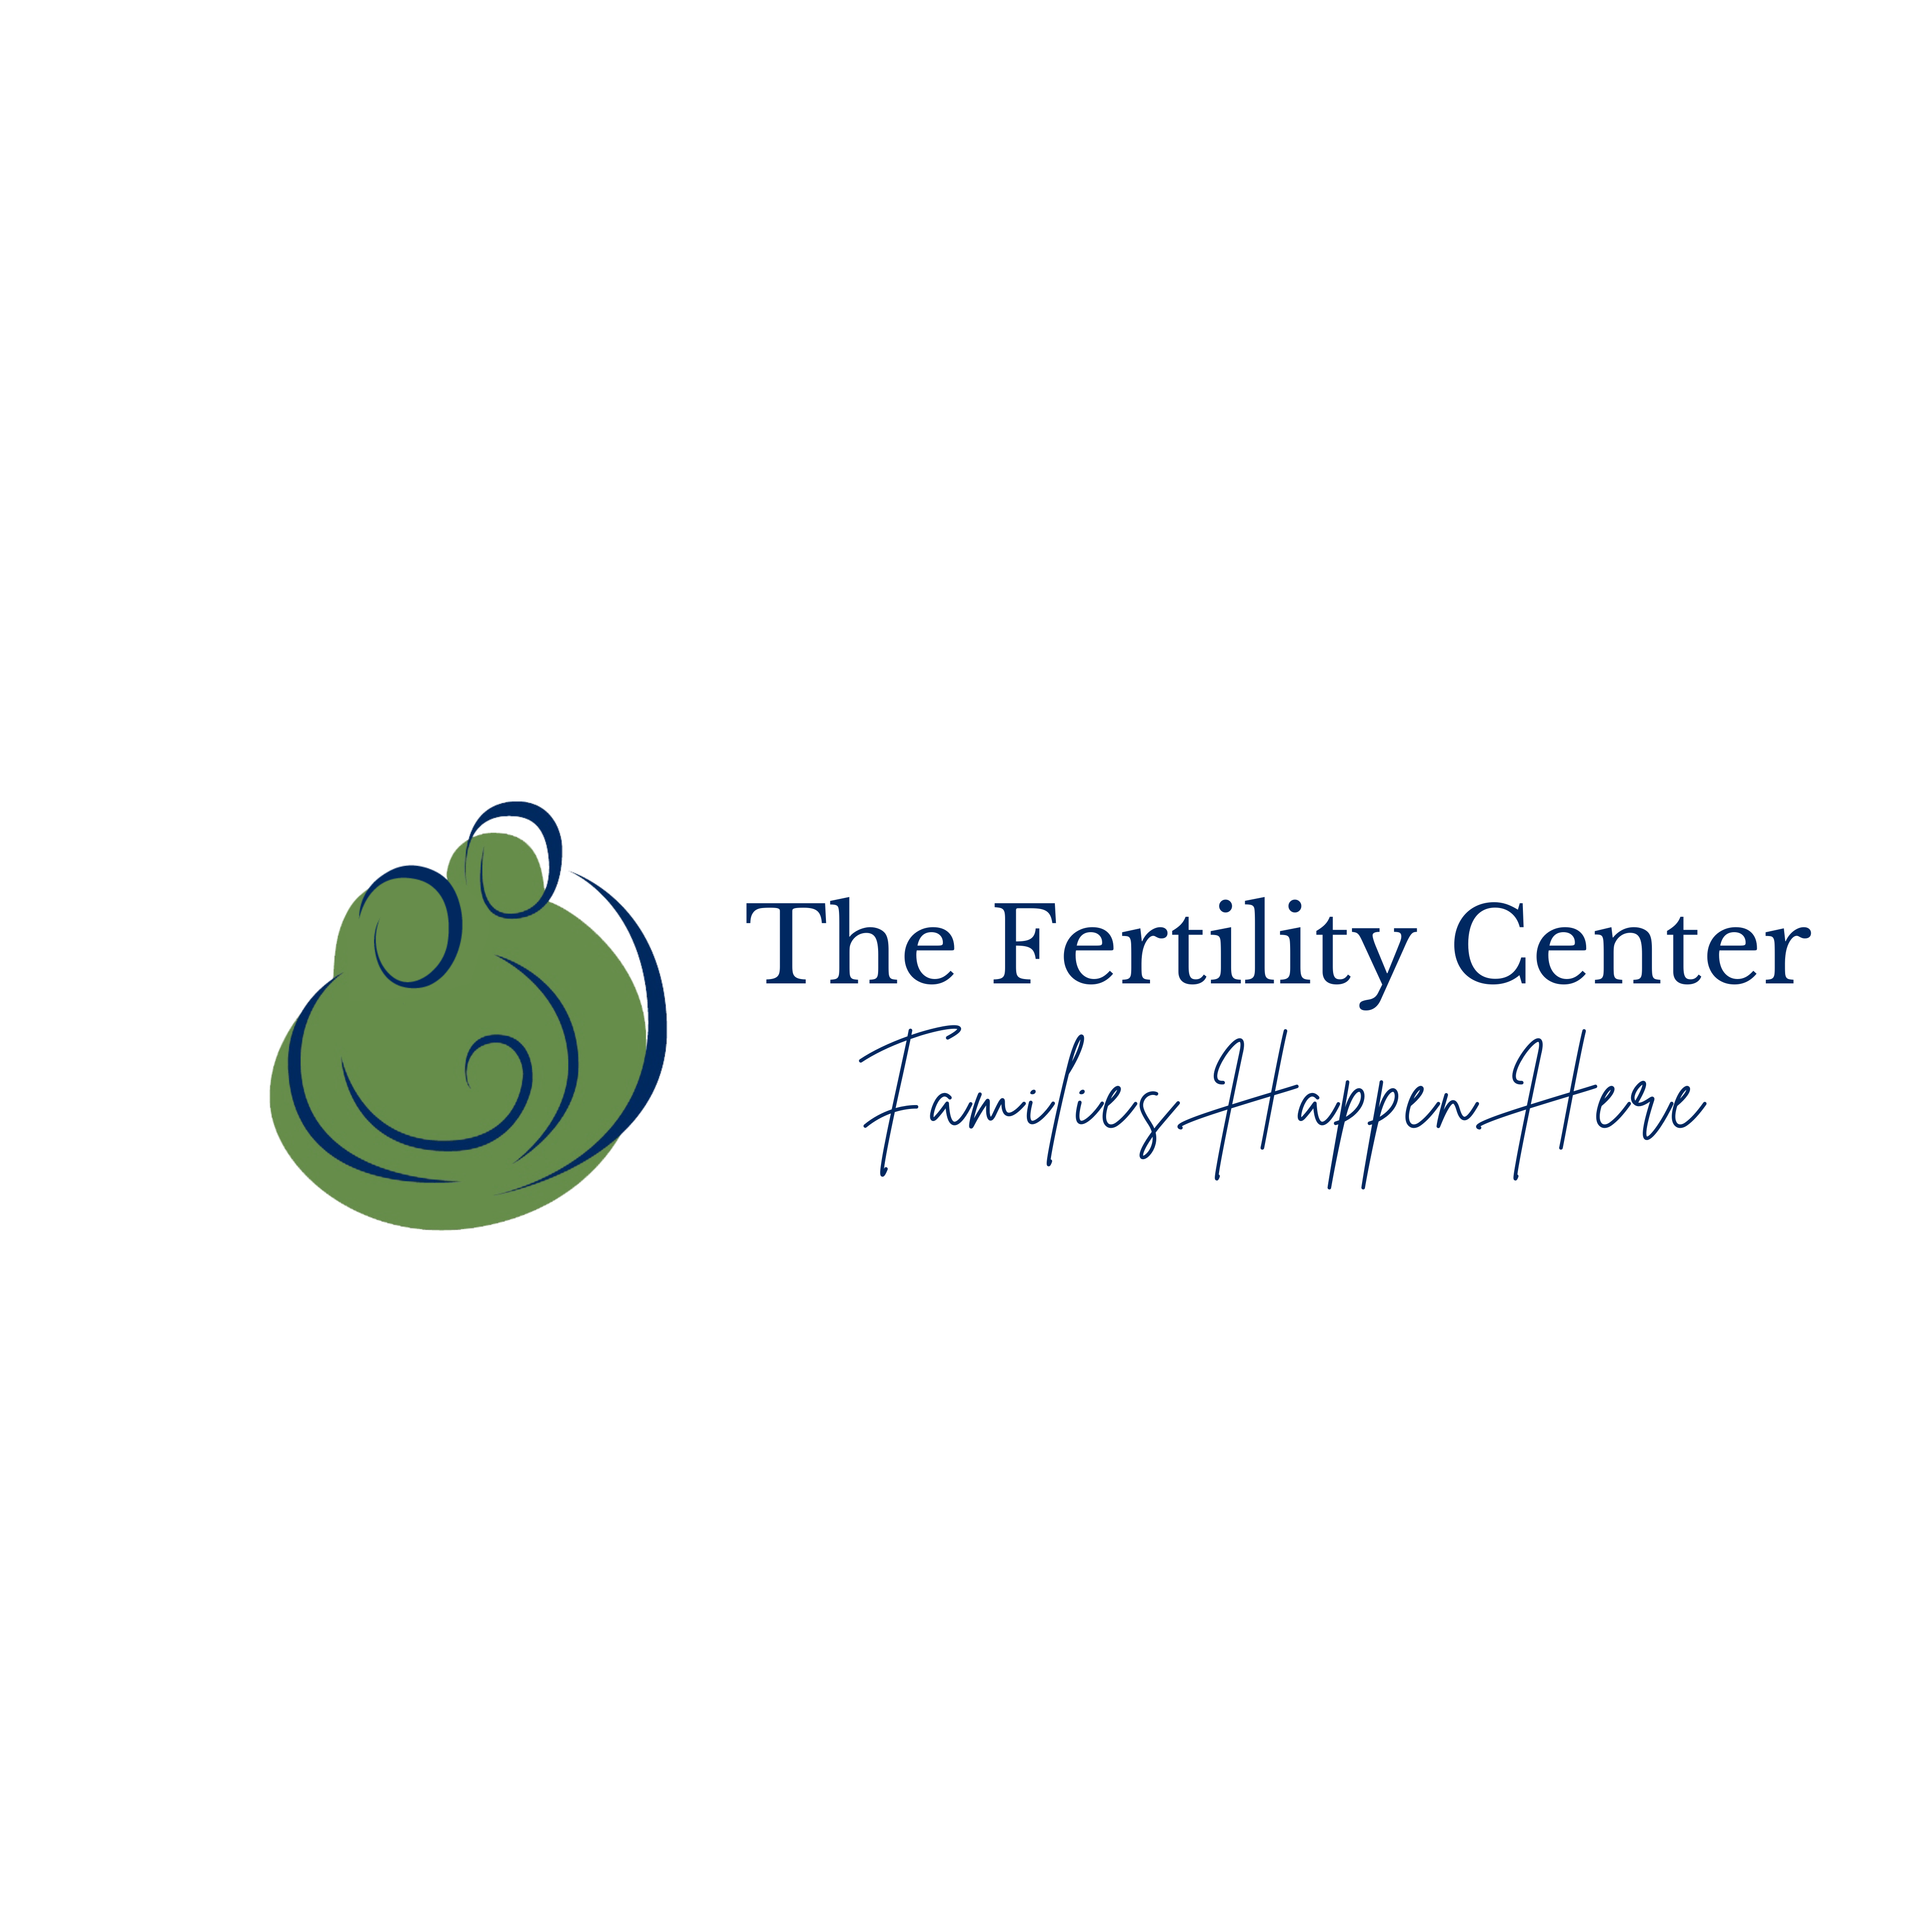 The Fertility Center